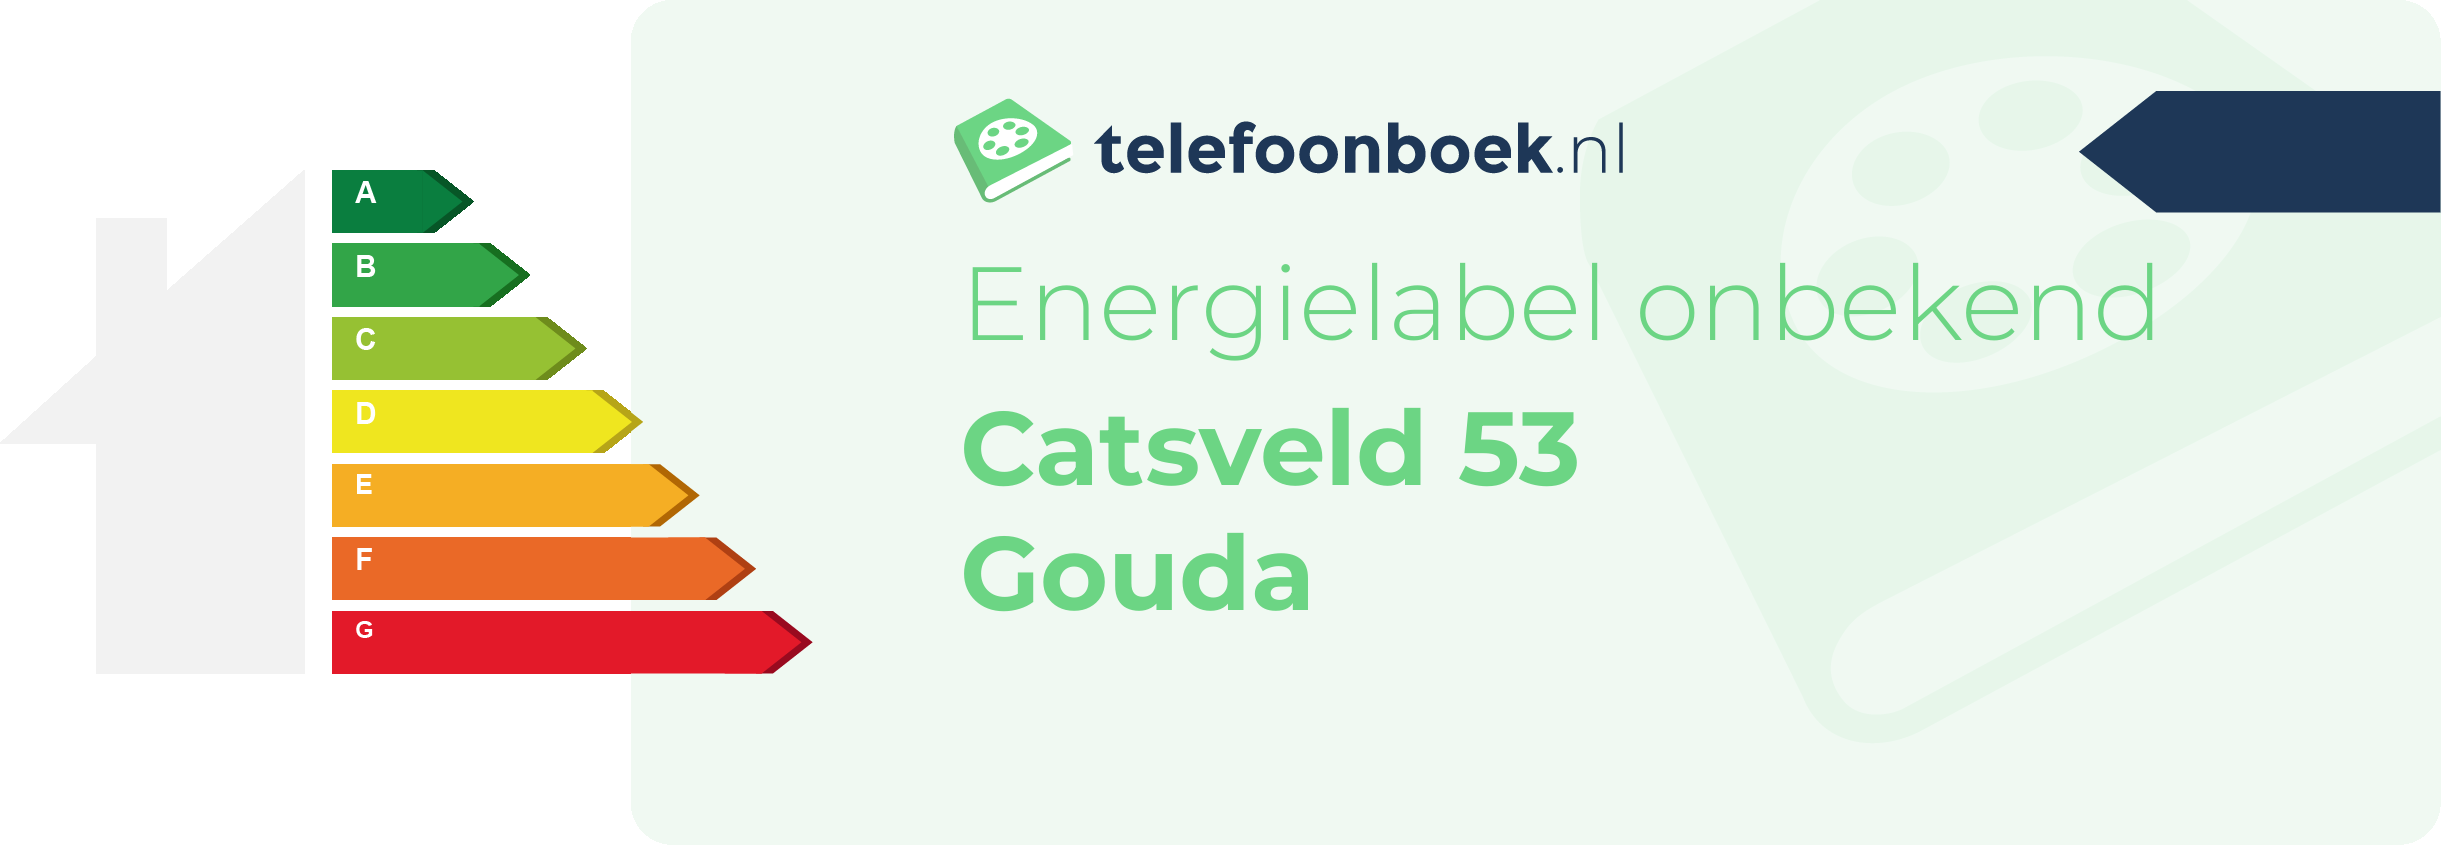 Energielabel Catsveld 53 Gouda